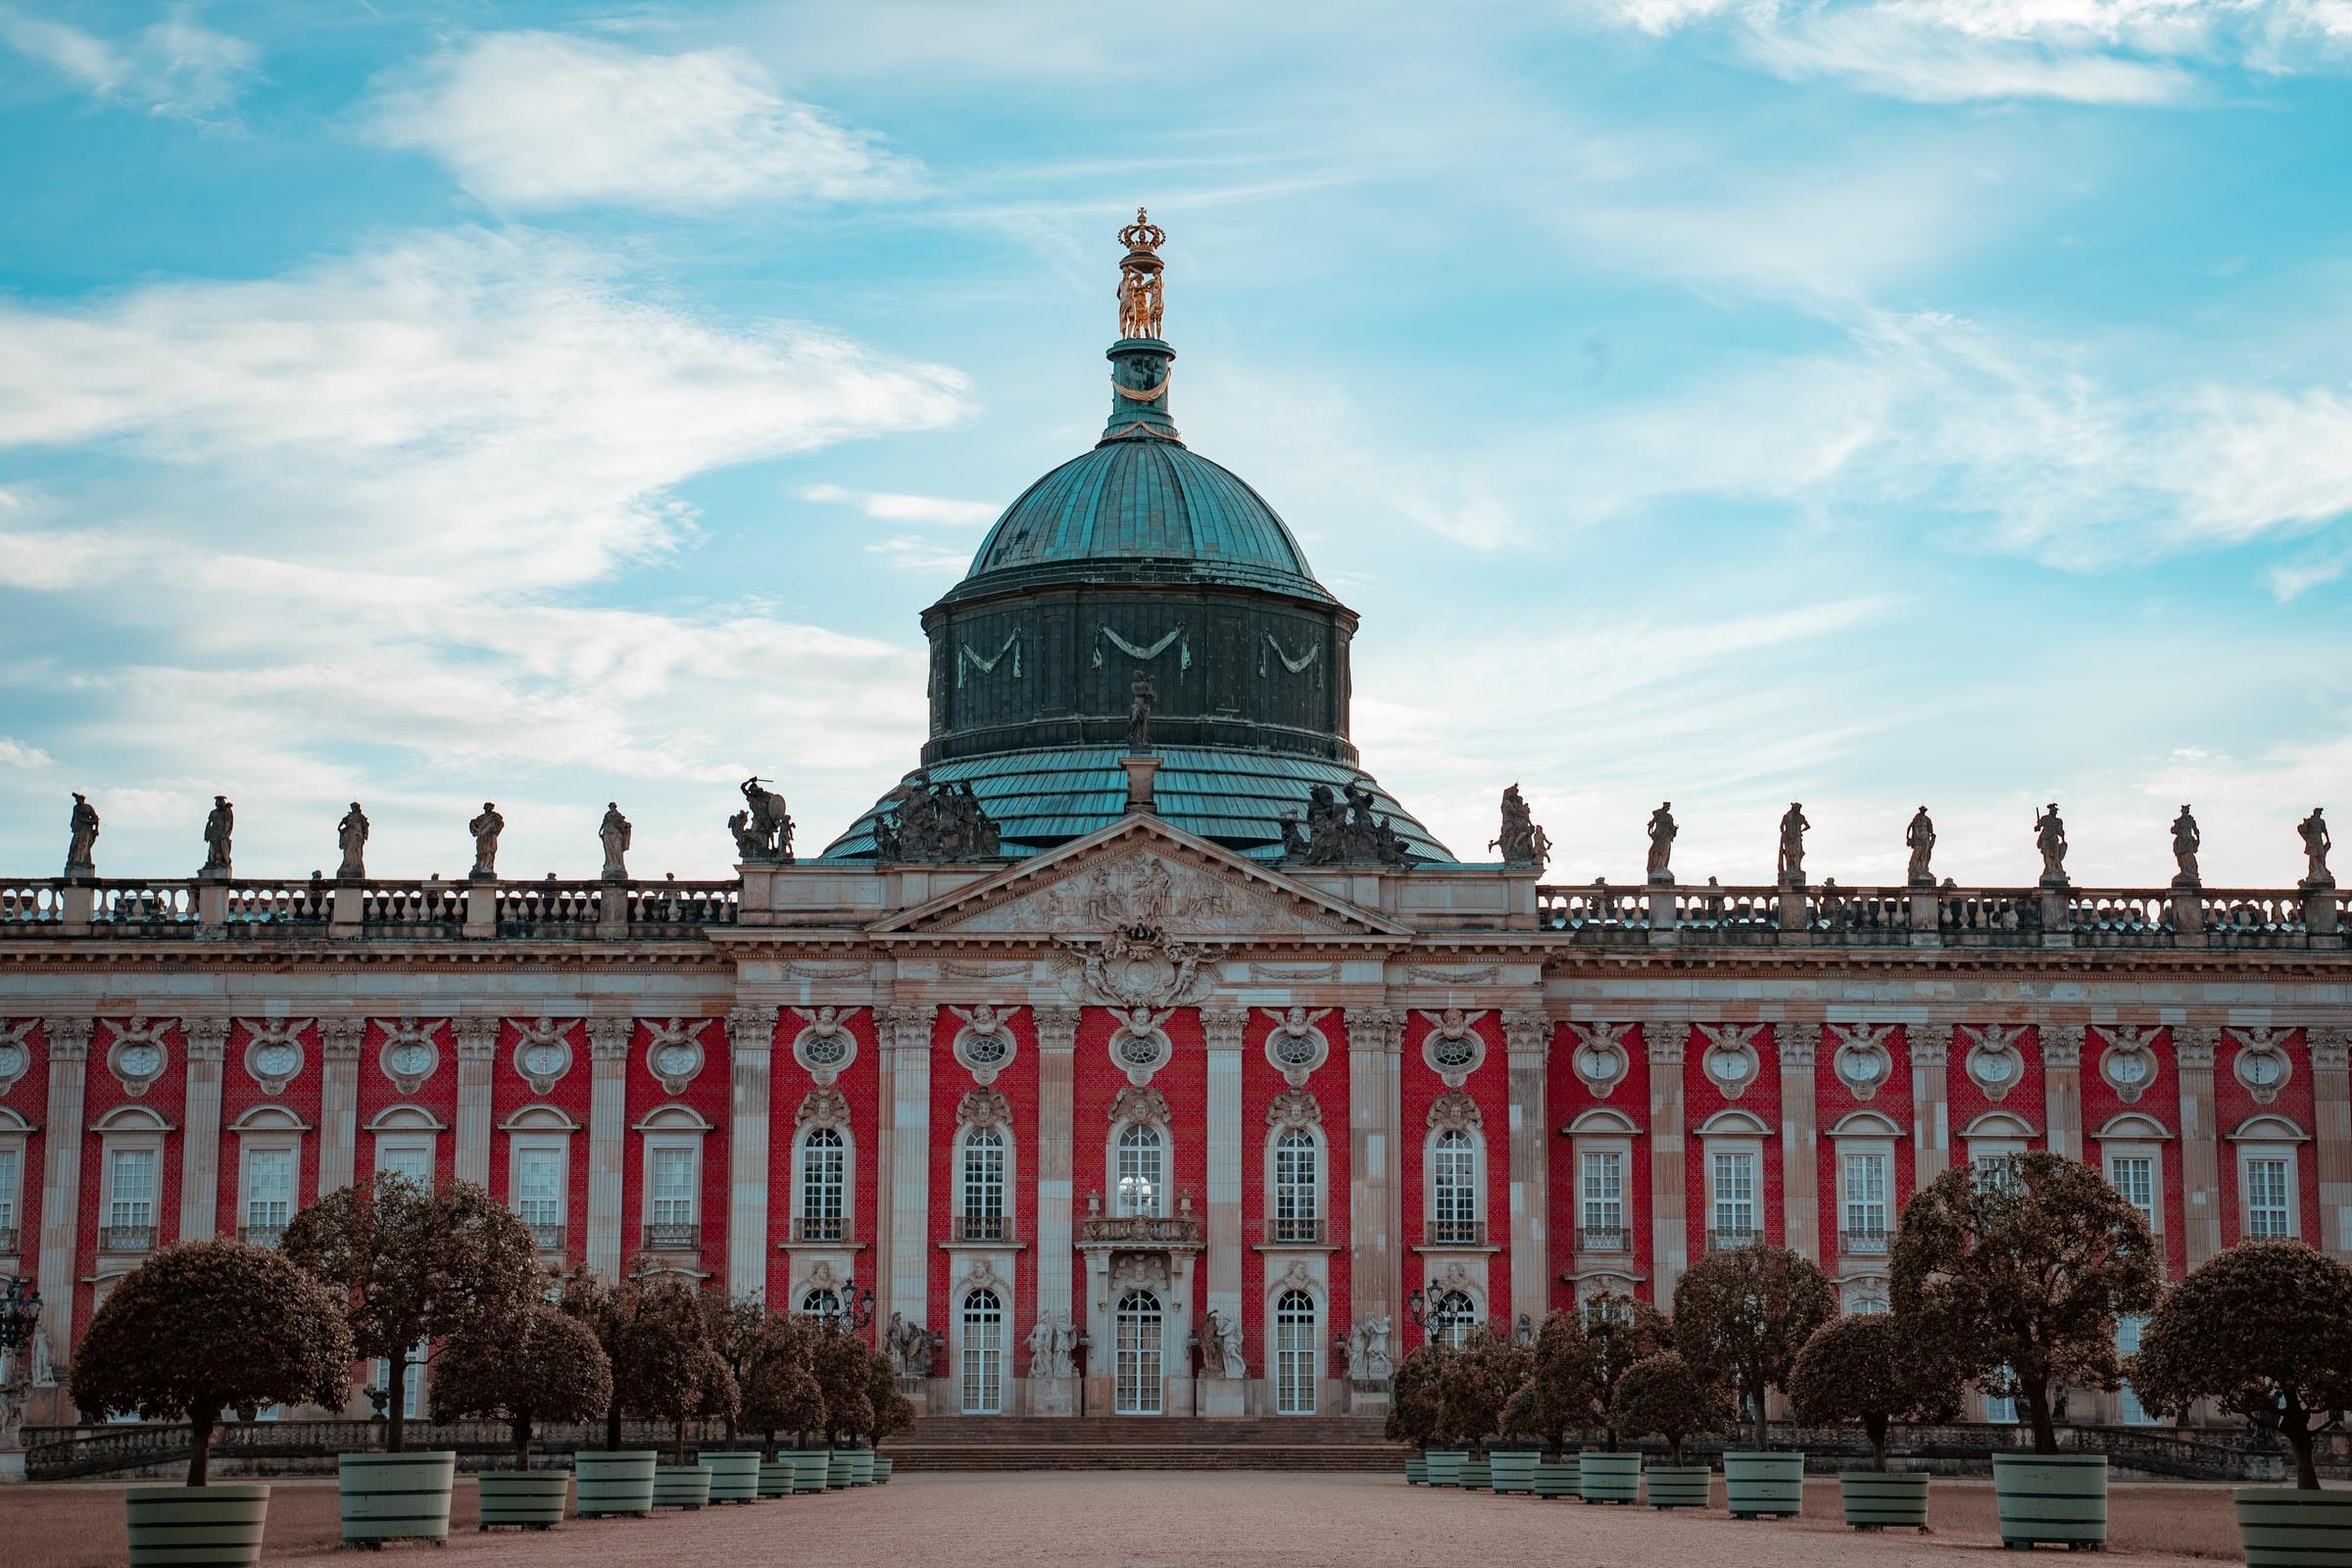 Free-tour-Potsdam:-the-city-of-Palaces-2